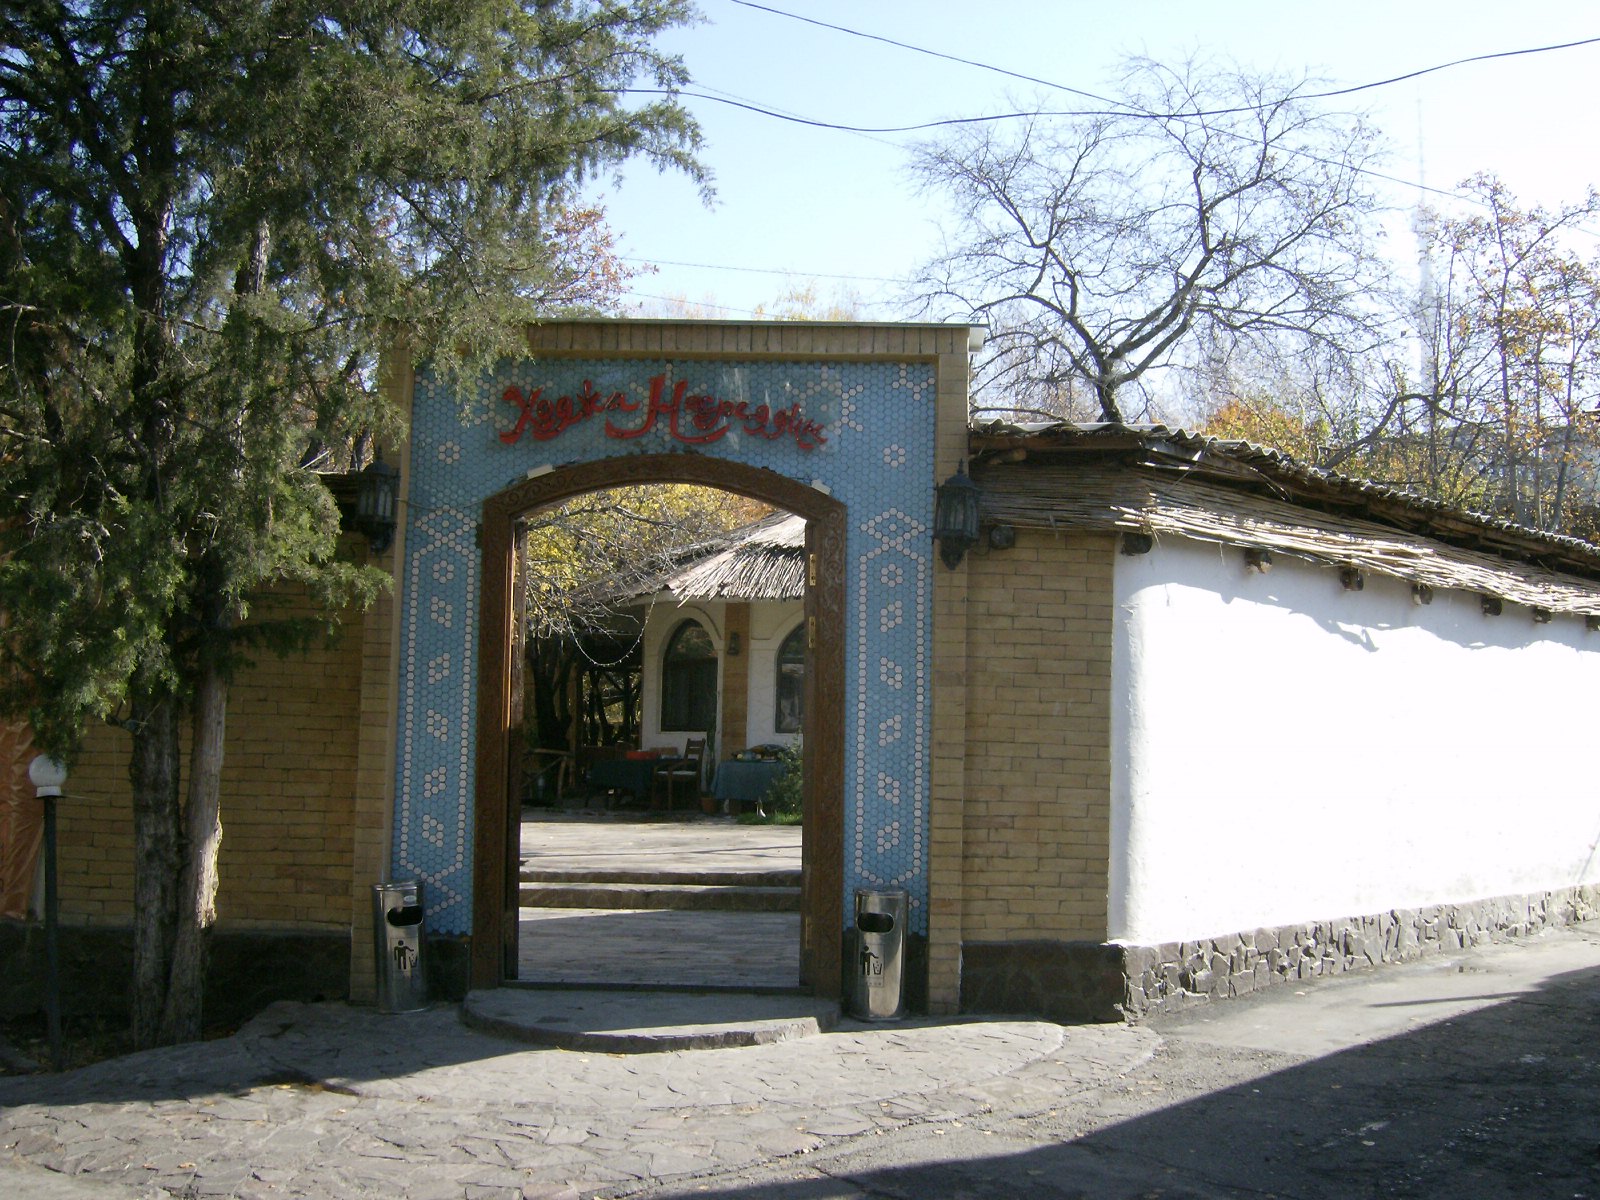 Entrance to Hodja Nasruddin restaurant